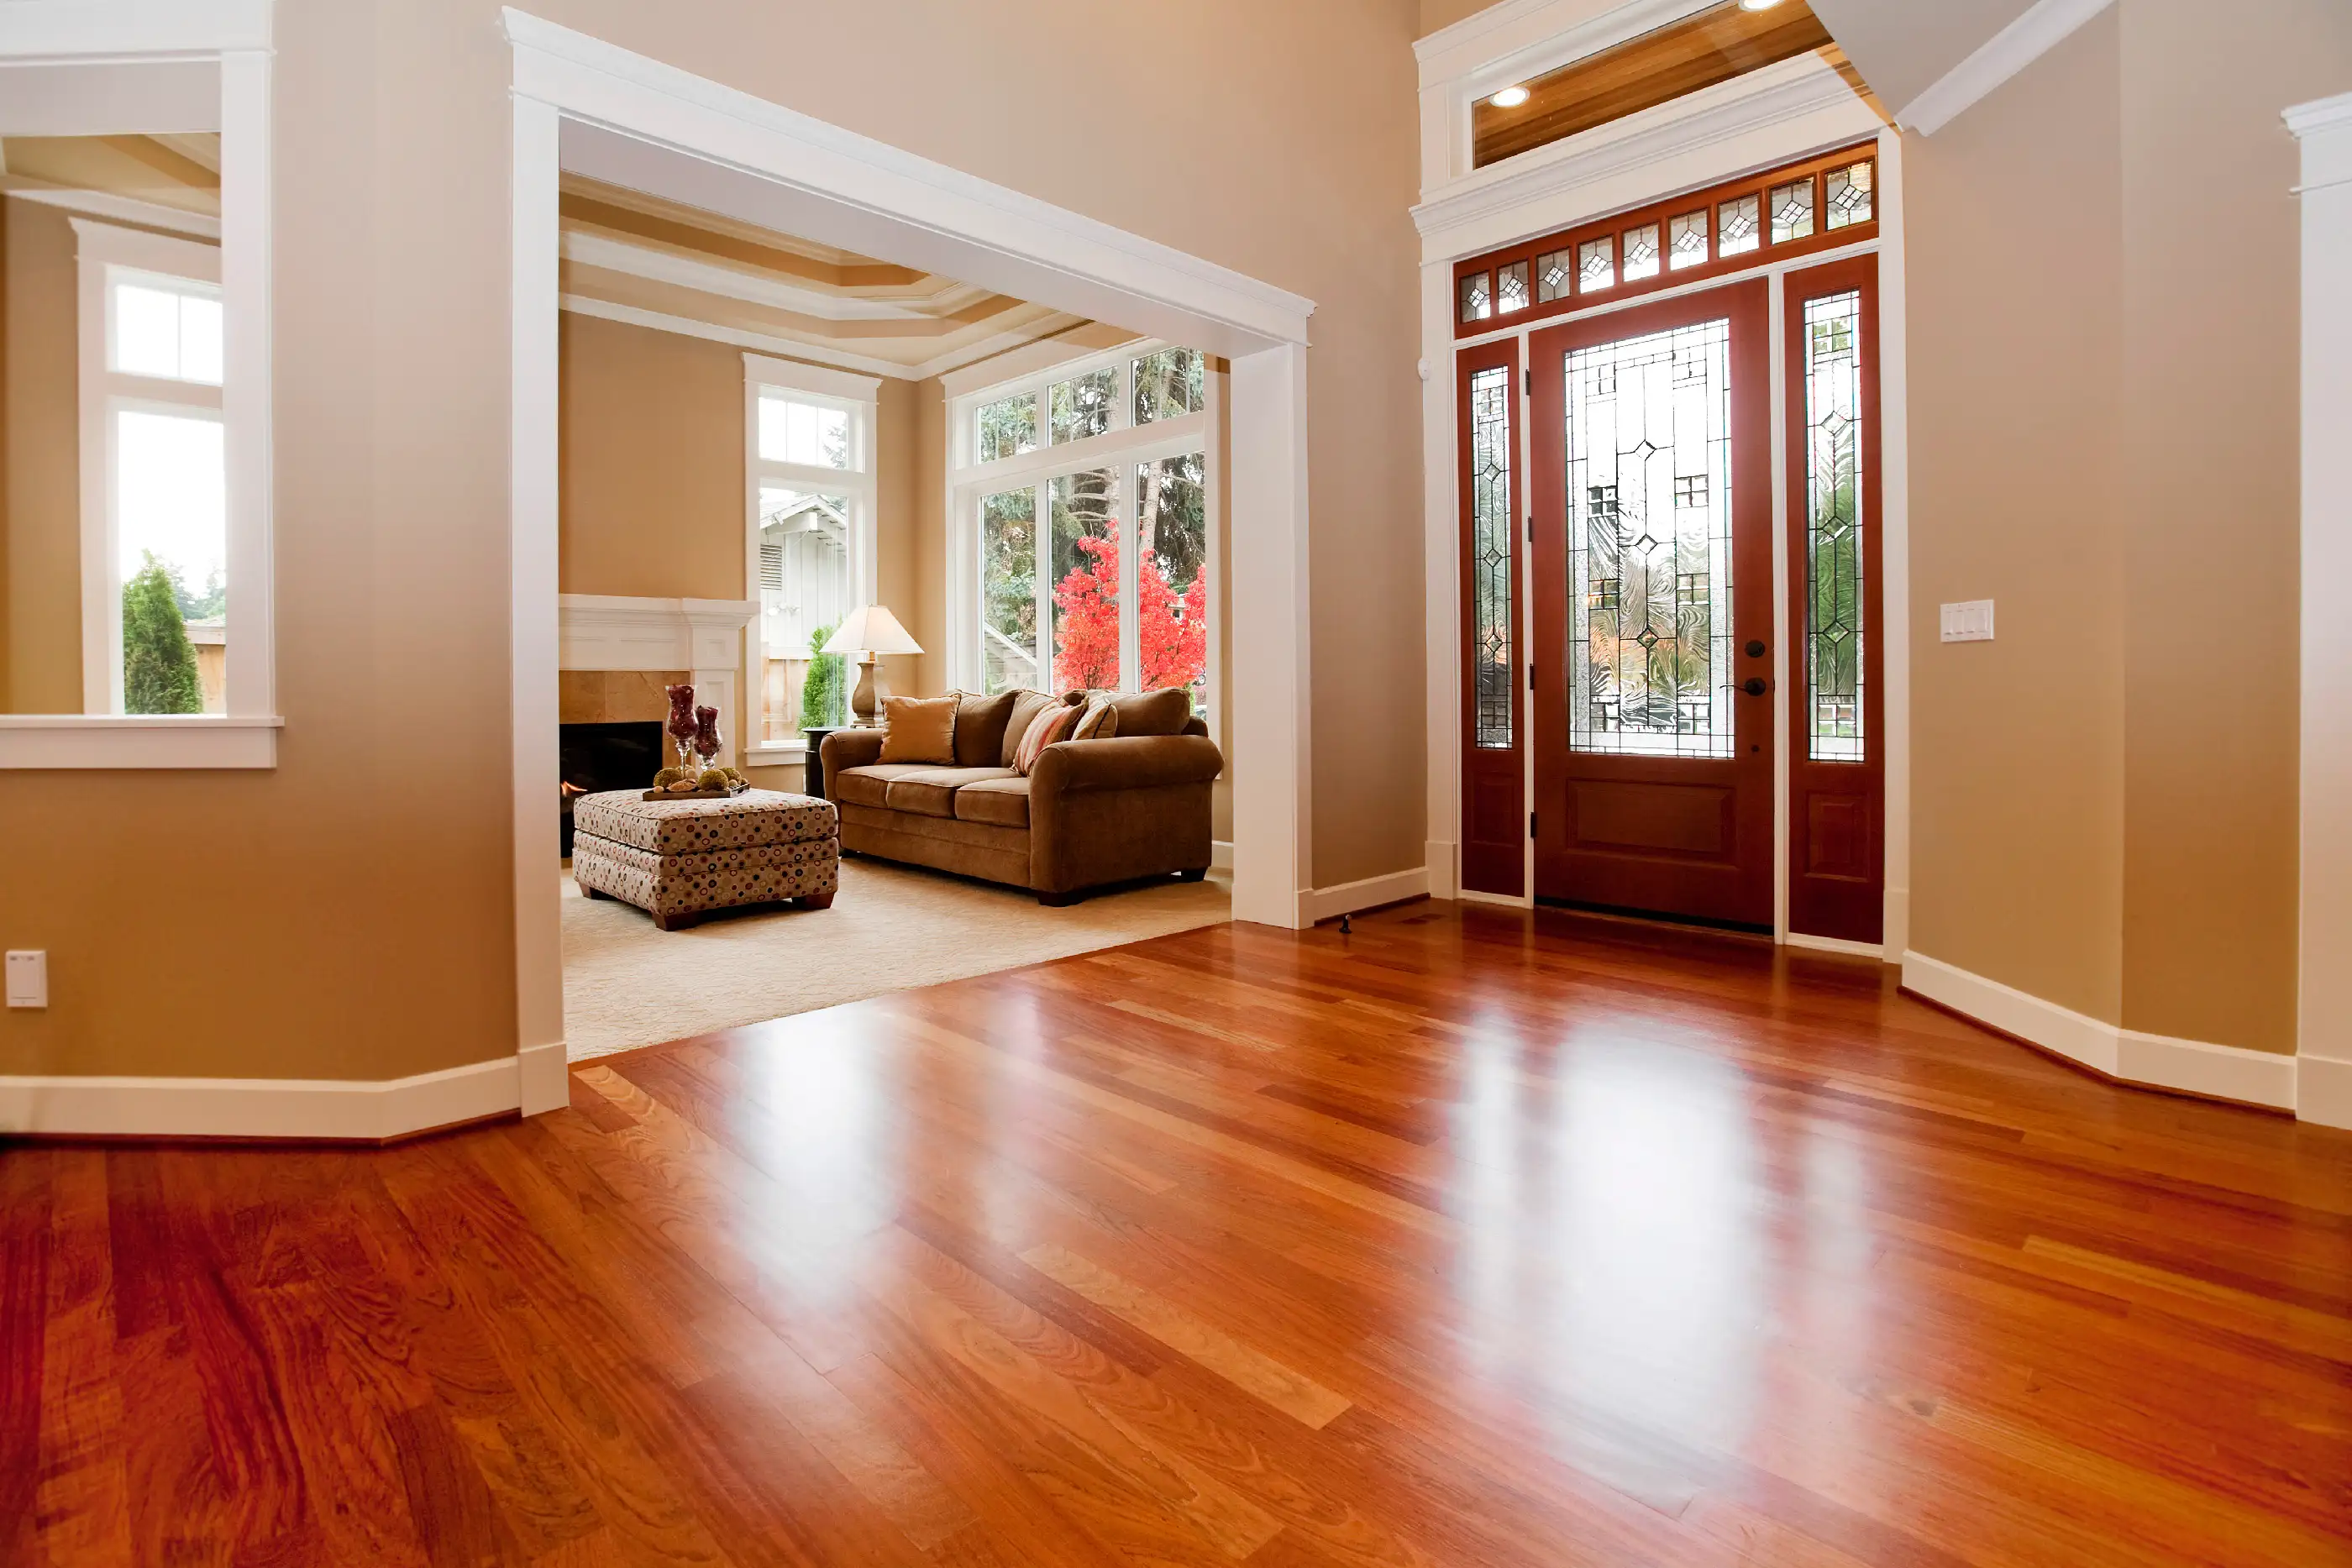 Beautiful New custom Entryway upscale home hardwood floors